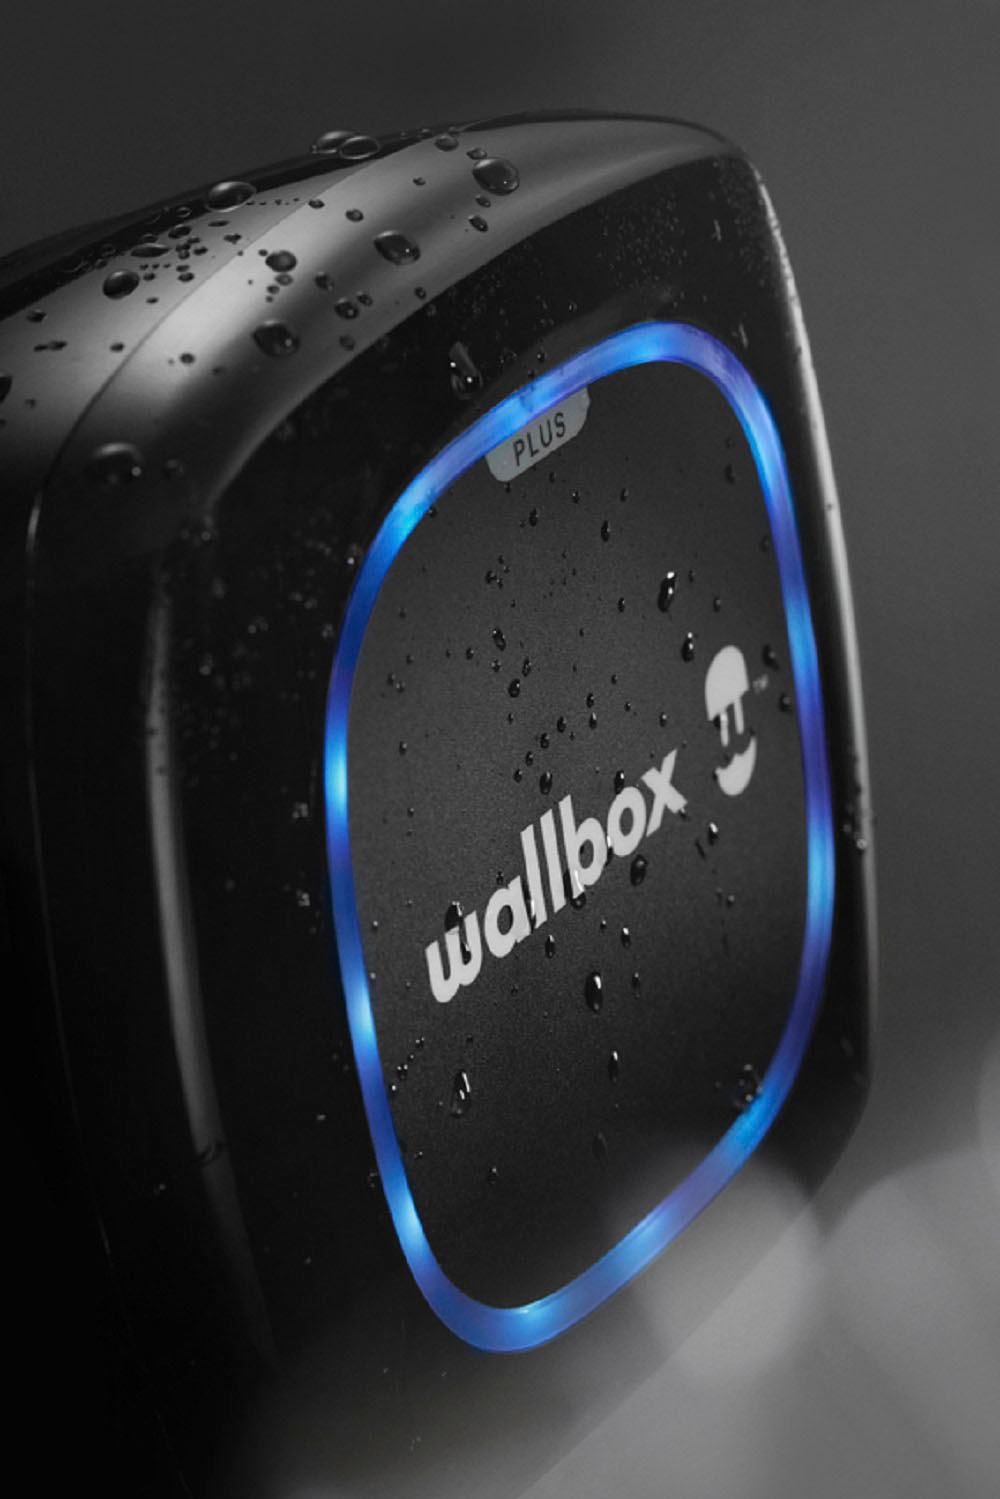 WALLBOX Borne de recharge Pulsar Plus - câble attaché 7m Type 2 - 1,4 à 11kW  - triphasé - Bluetooth - Wifi - WallBox - Carplug